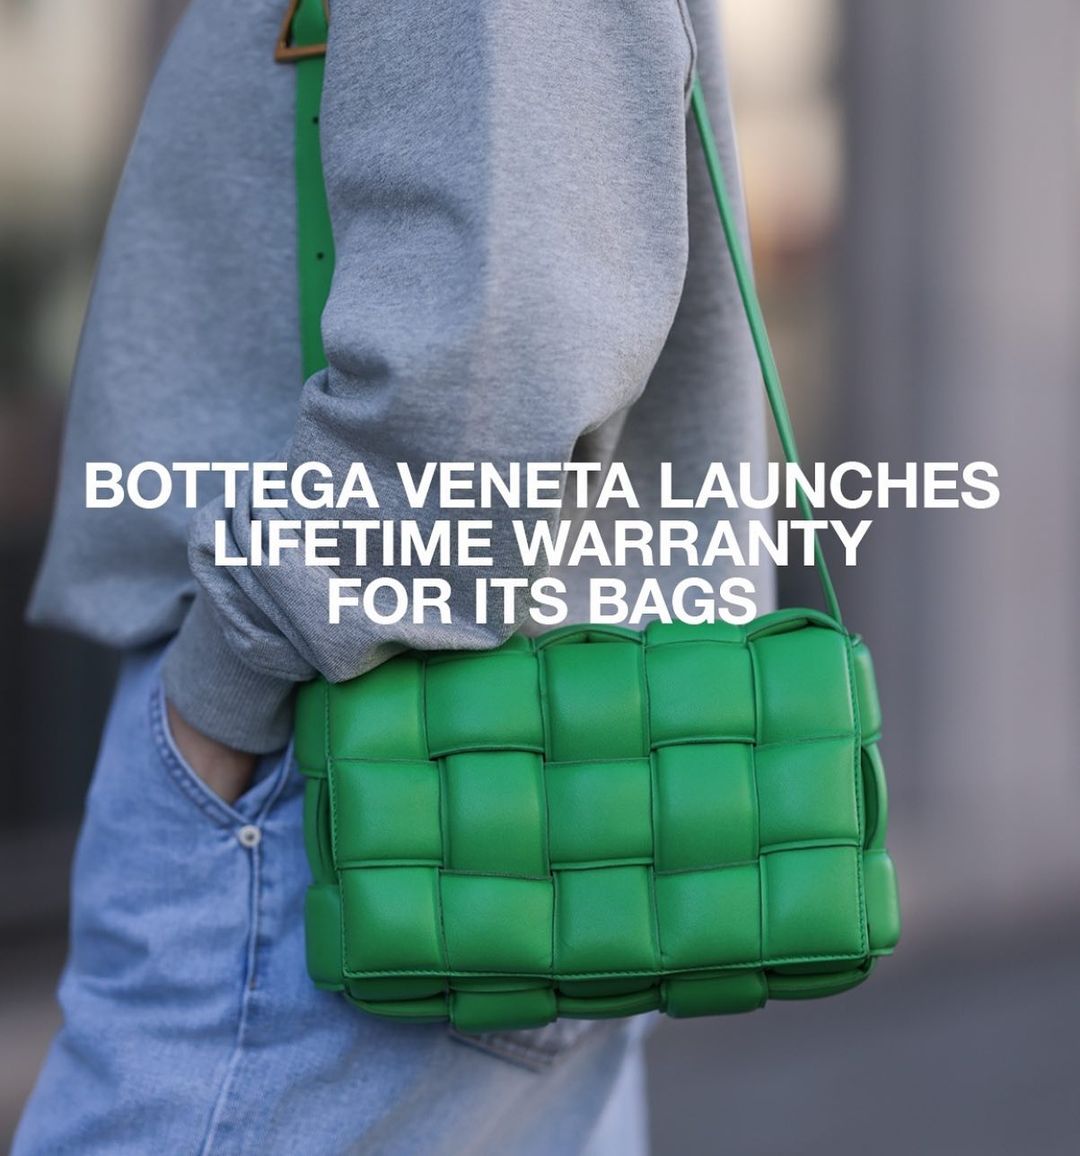 BOTTEGA VENETA（ボッテガ・ヴェネタ）のバッグ「カセット」は